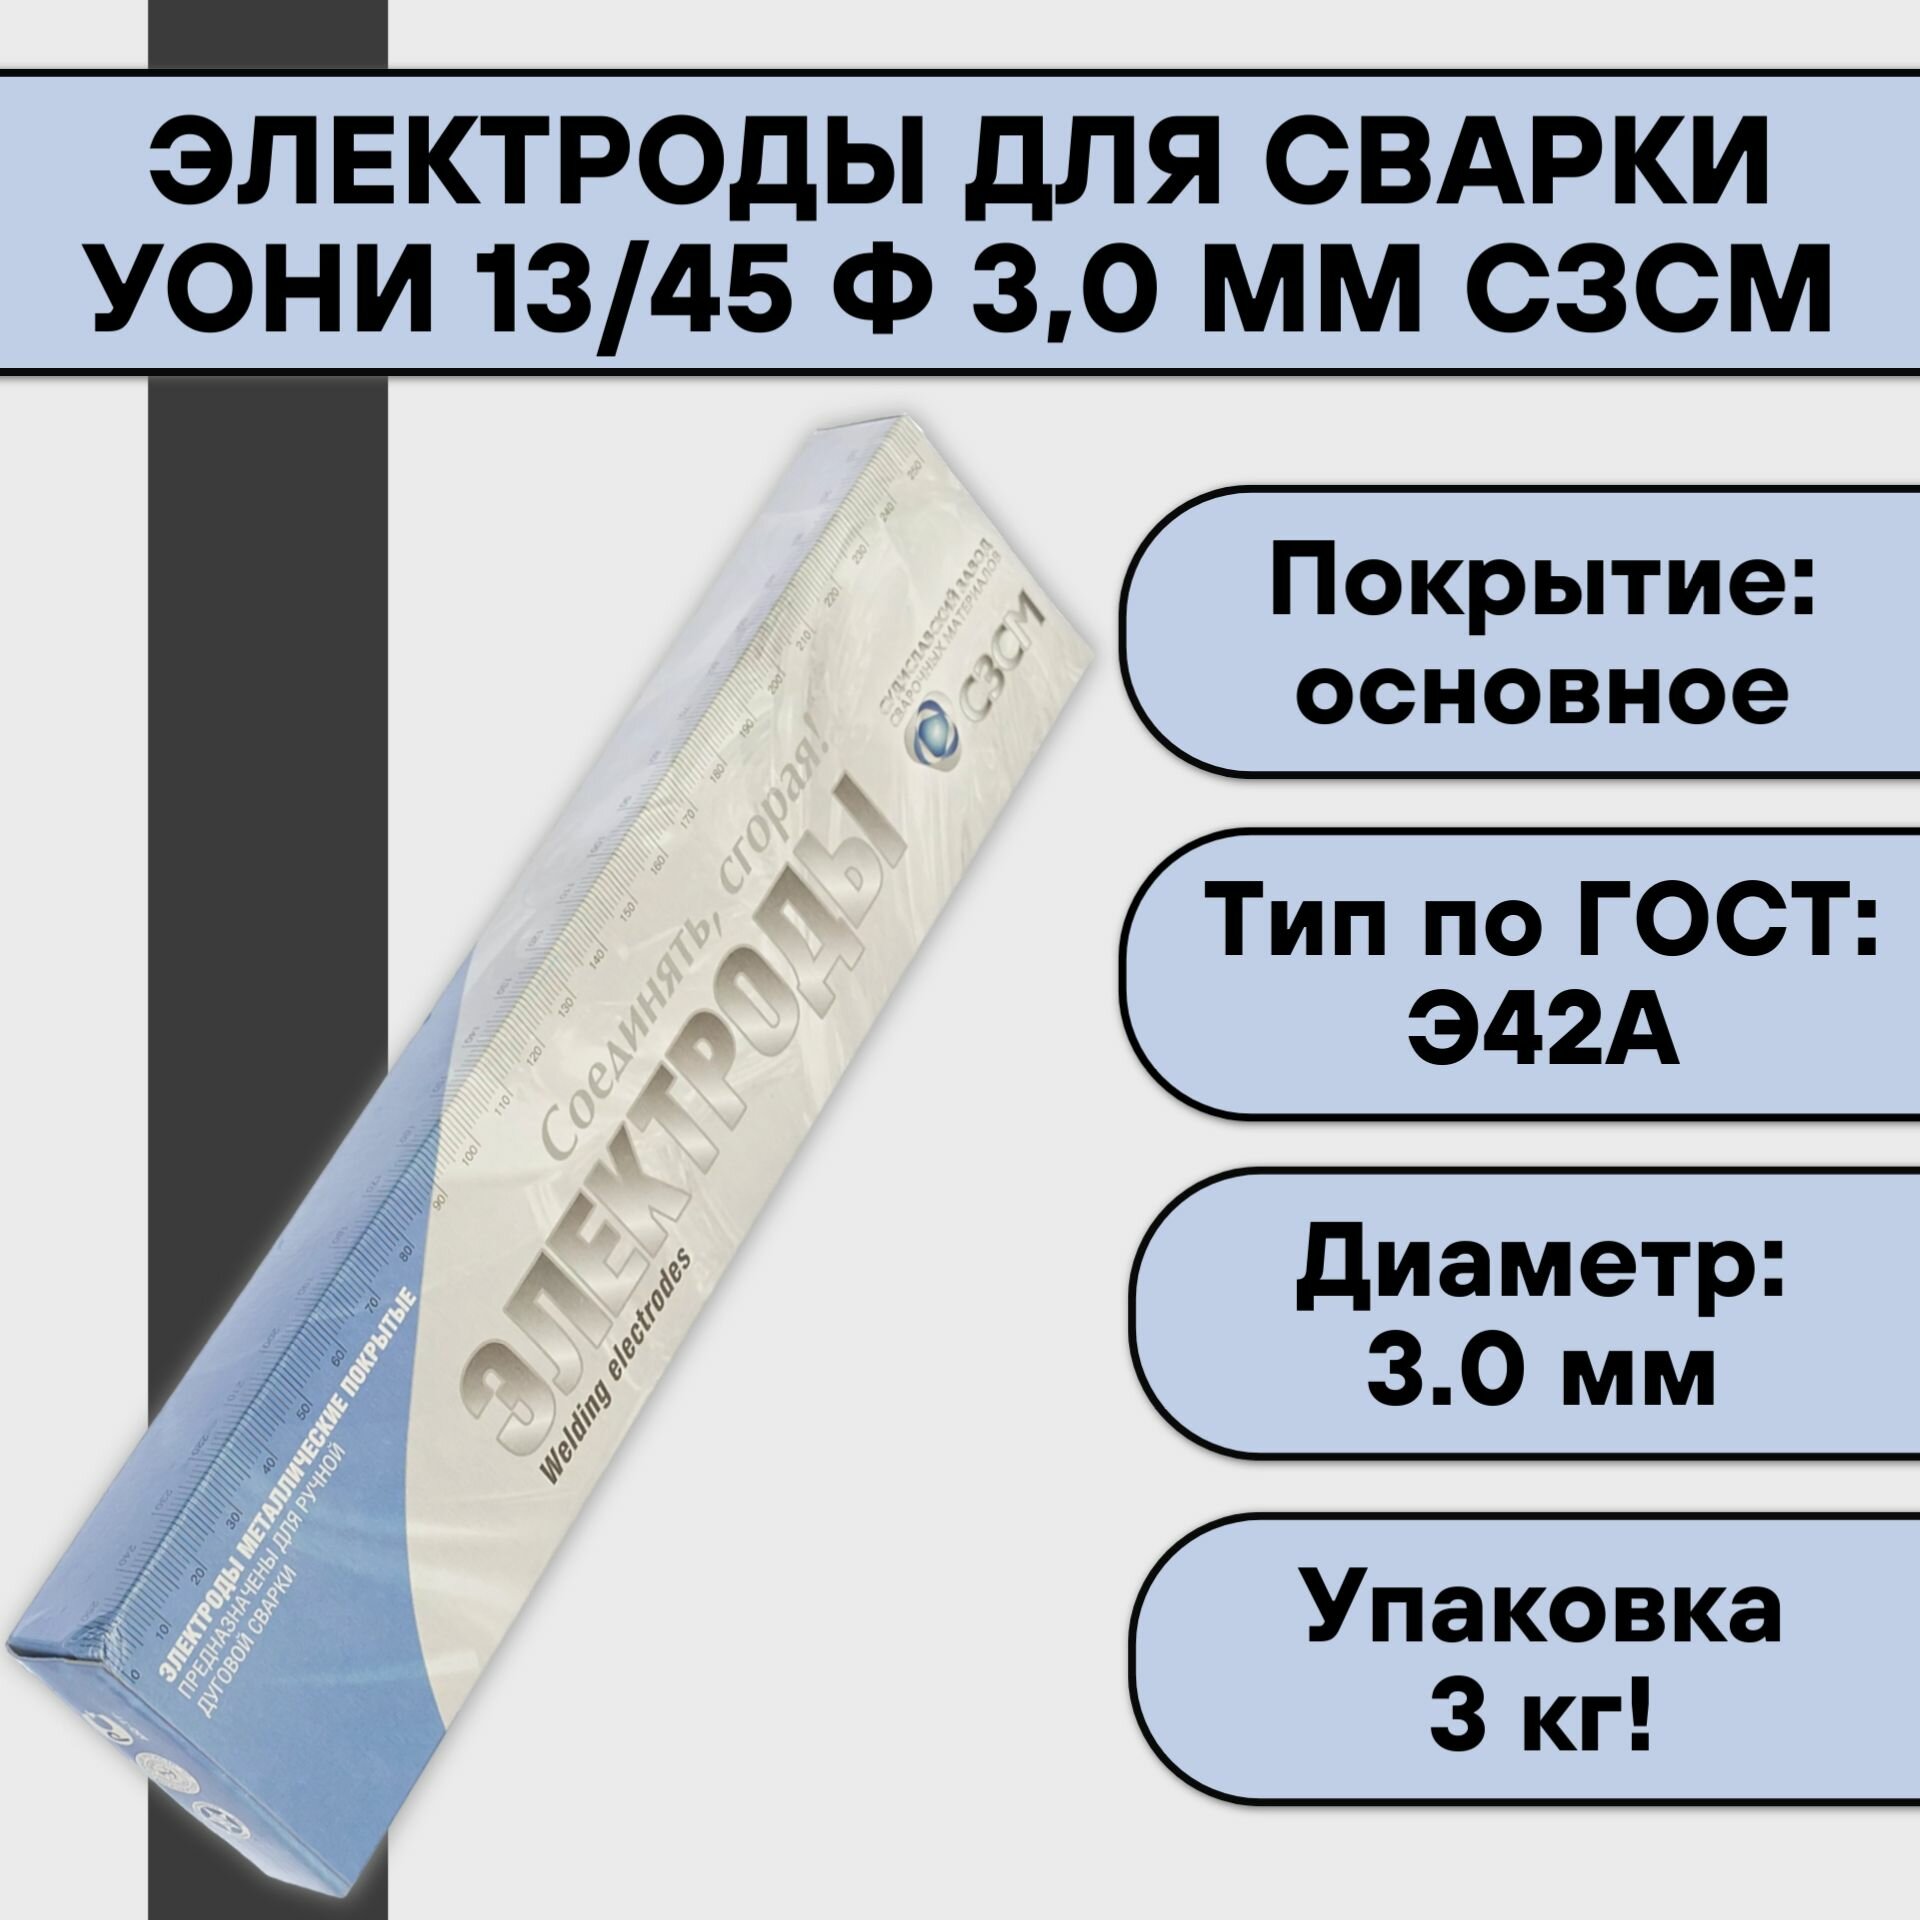 Электроды для сварки УОНИ 13/45 ф 3,0 мм (3 кг) сзсм